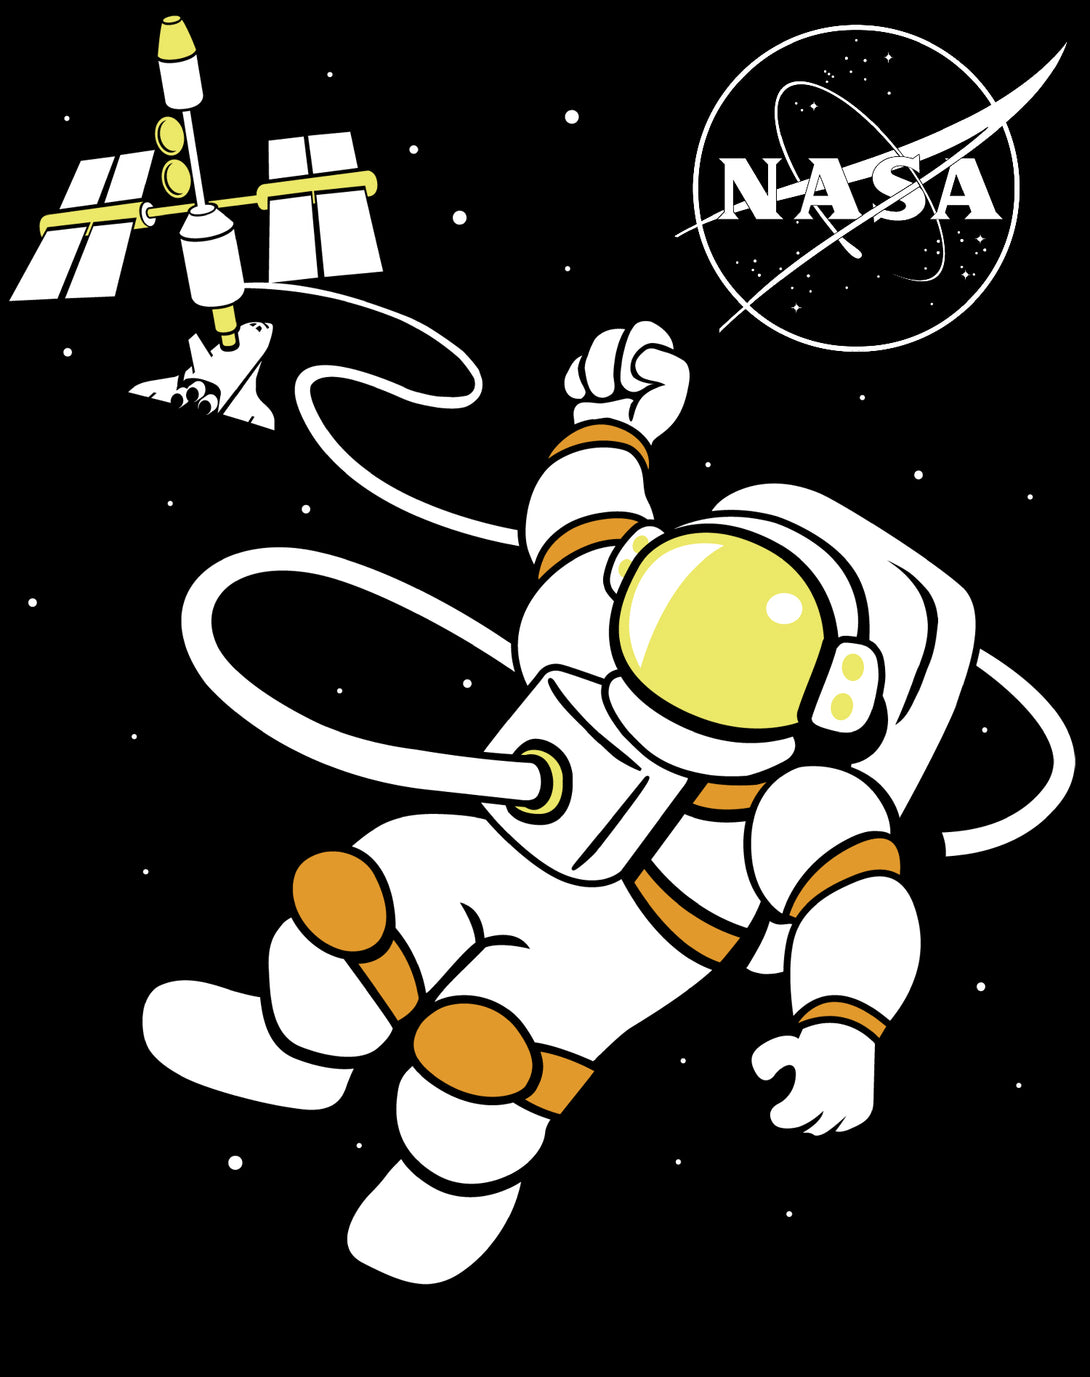 Science Space NASA Astronaut Shuttle Rocket Nerd Geek Chic Official Youth T-shirt Black - Urban Species Design Close Up